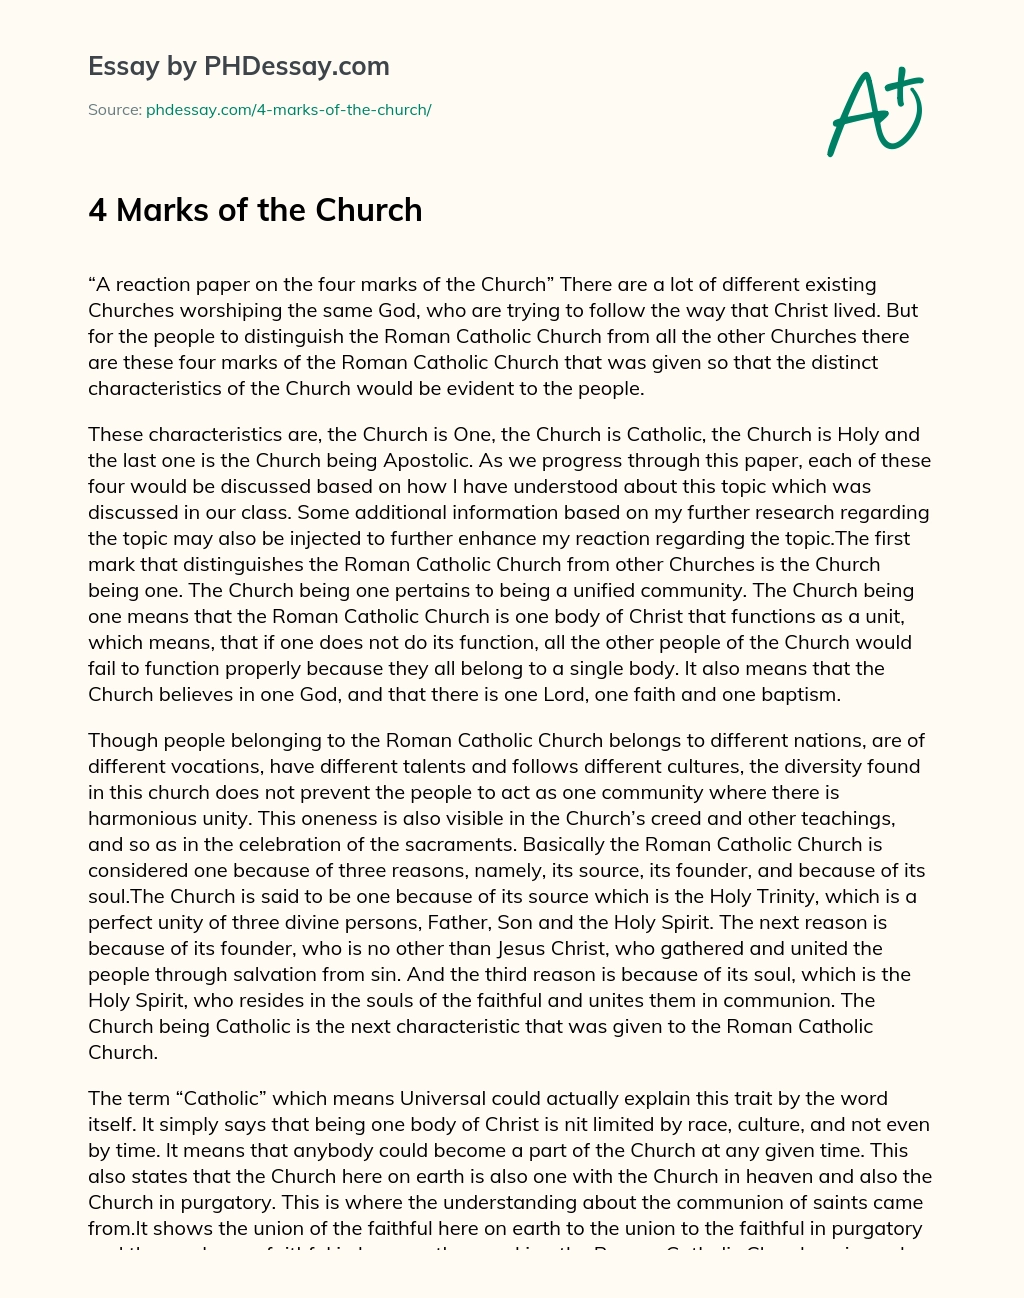 4 Marks of the Church essay